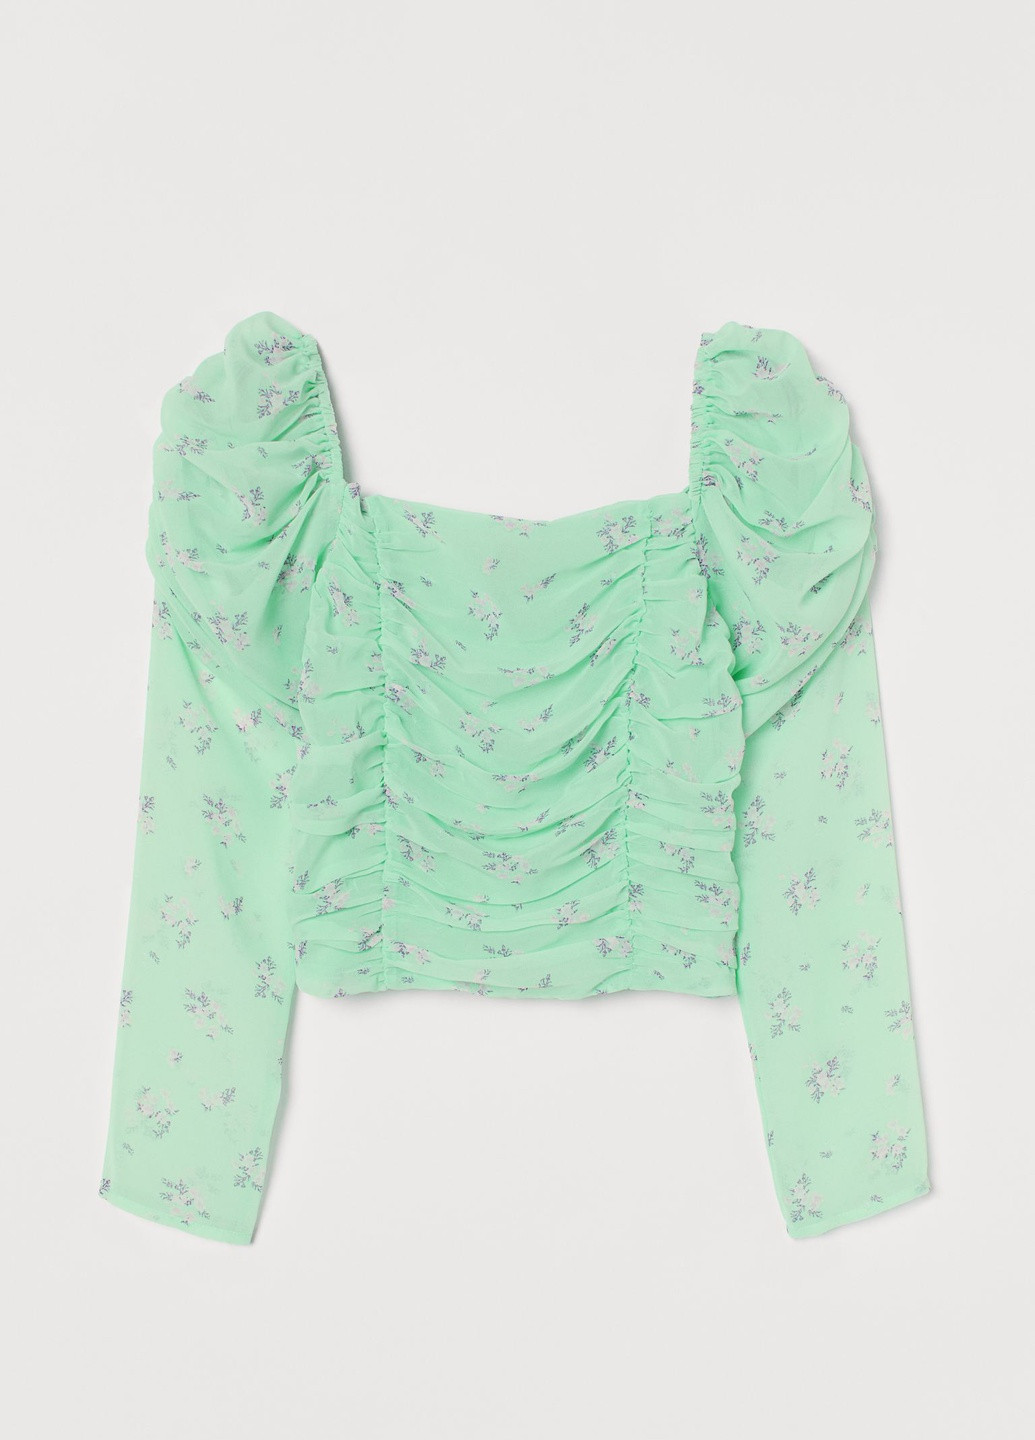 Світло-зелена літня блуза H&M